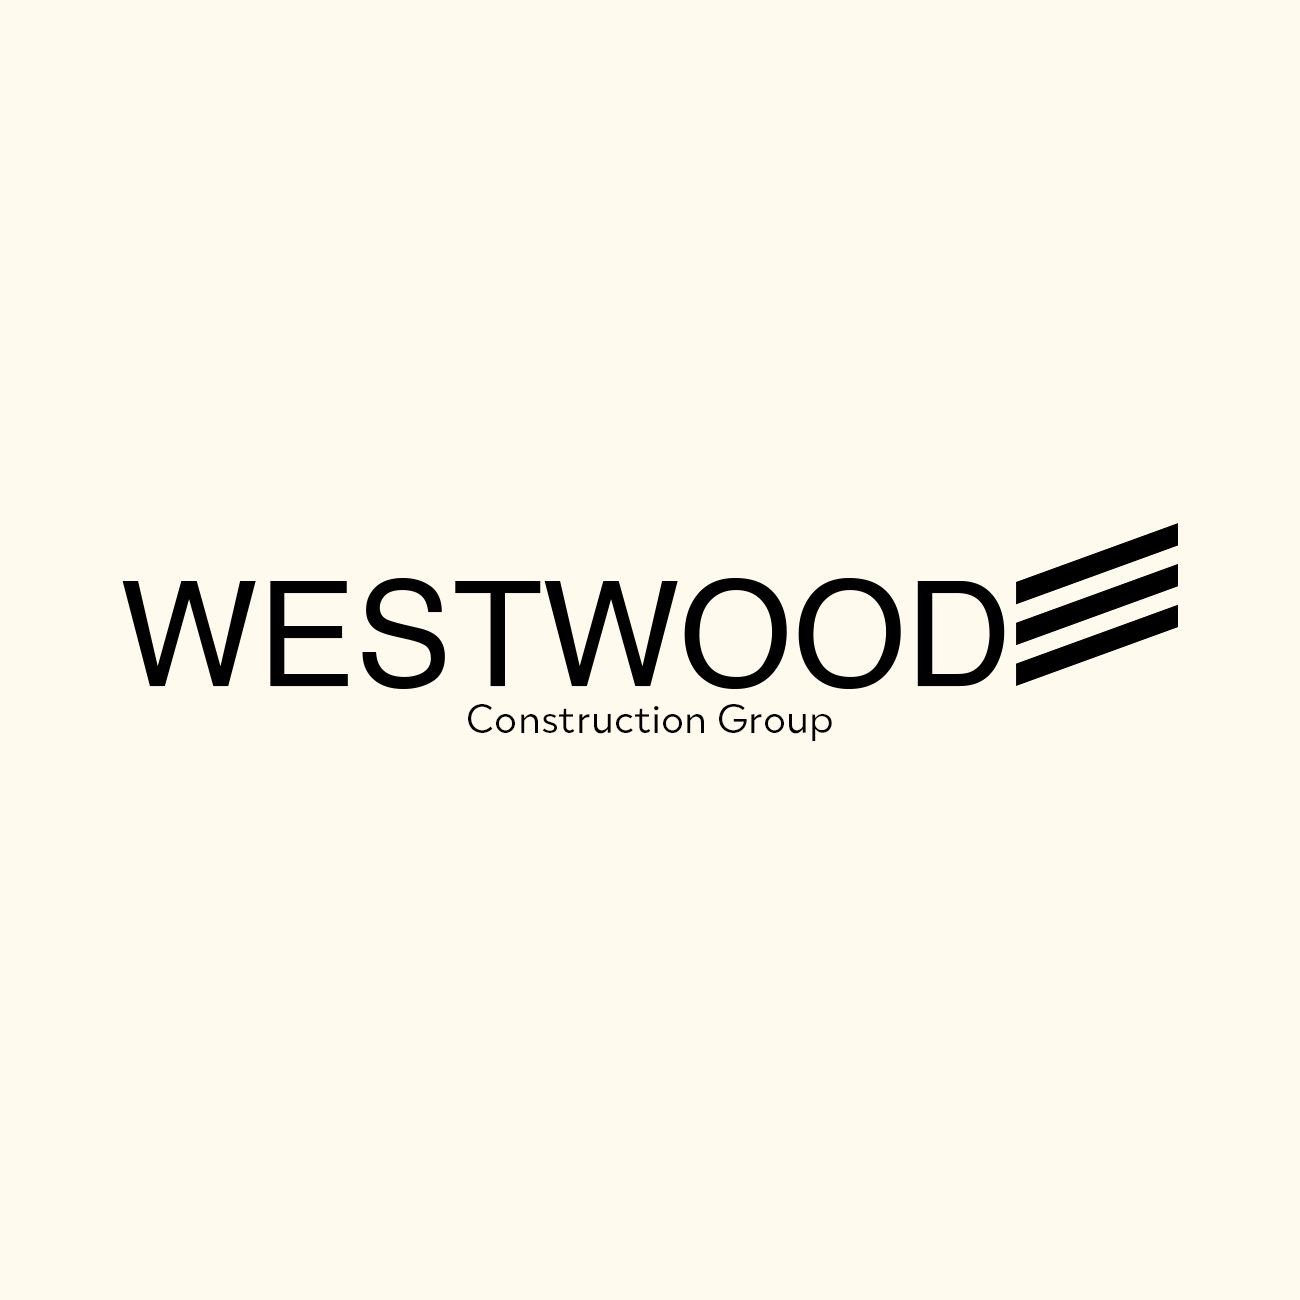 Westwood Construction Group's logo